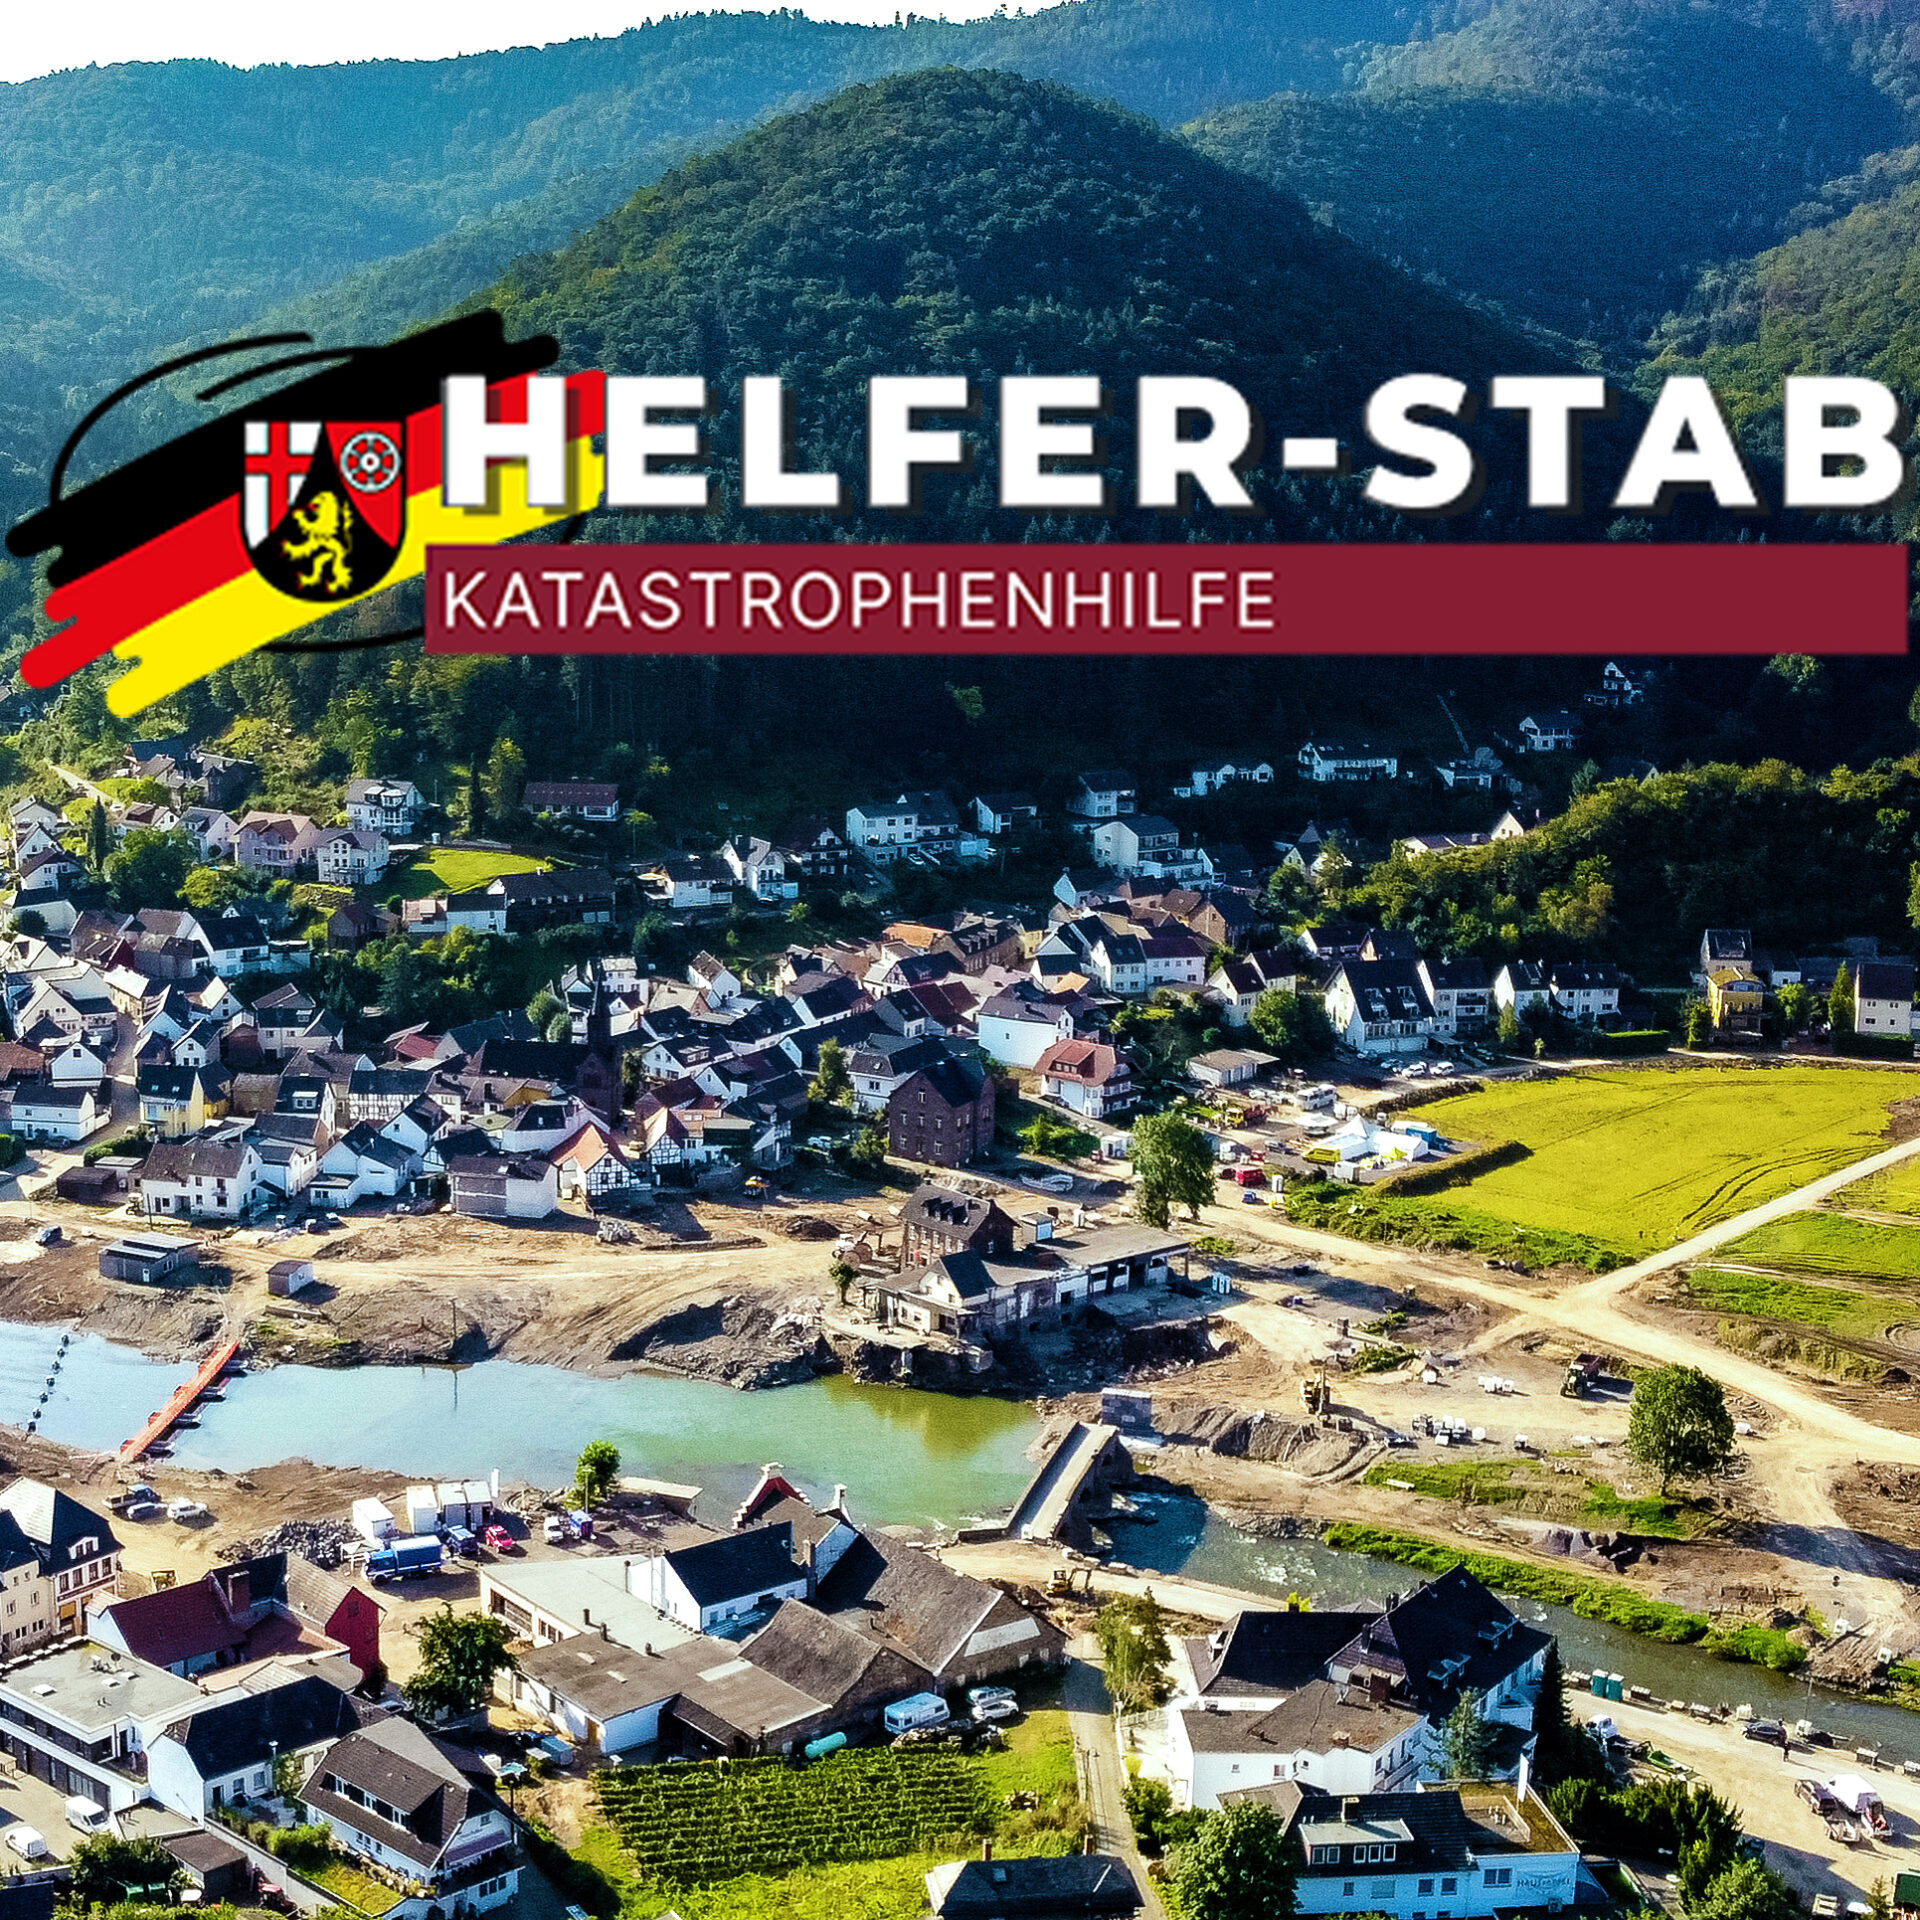 (c) Helfer-stab.de